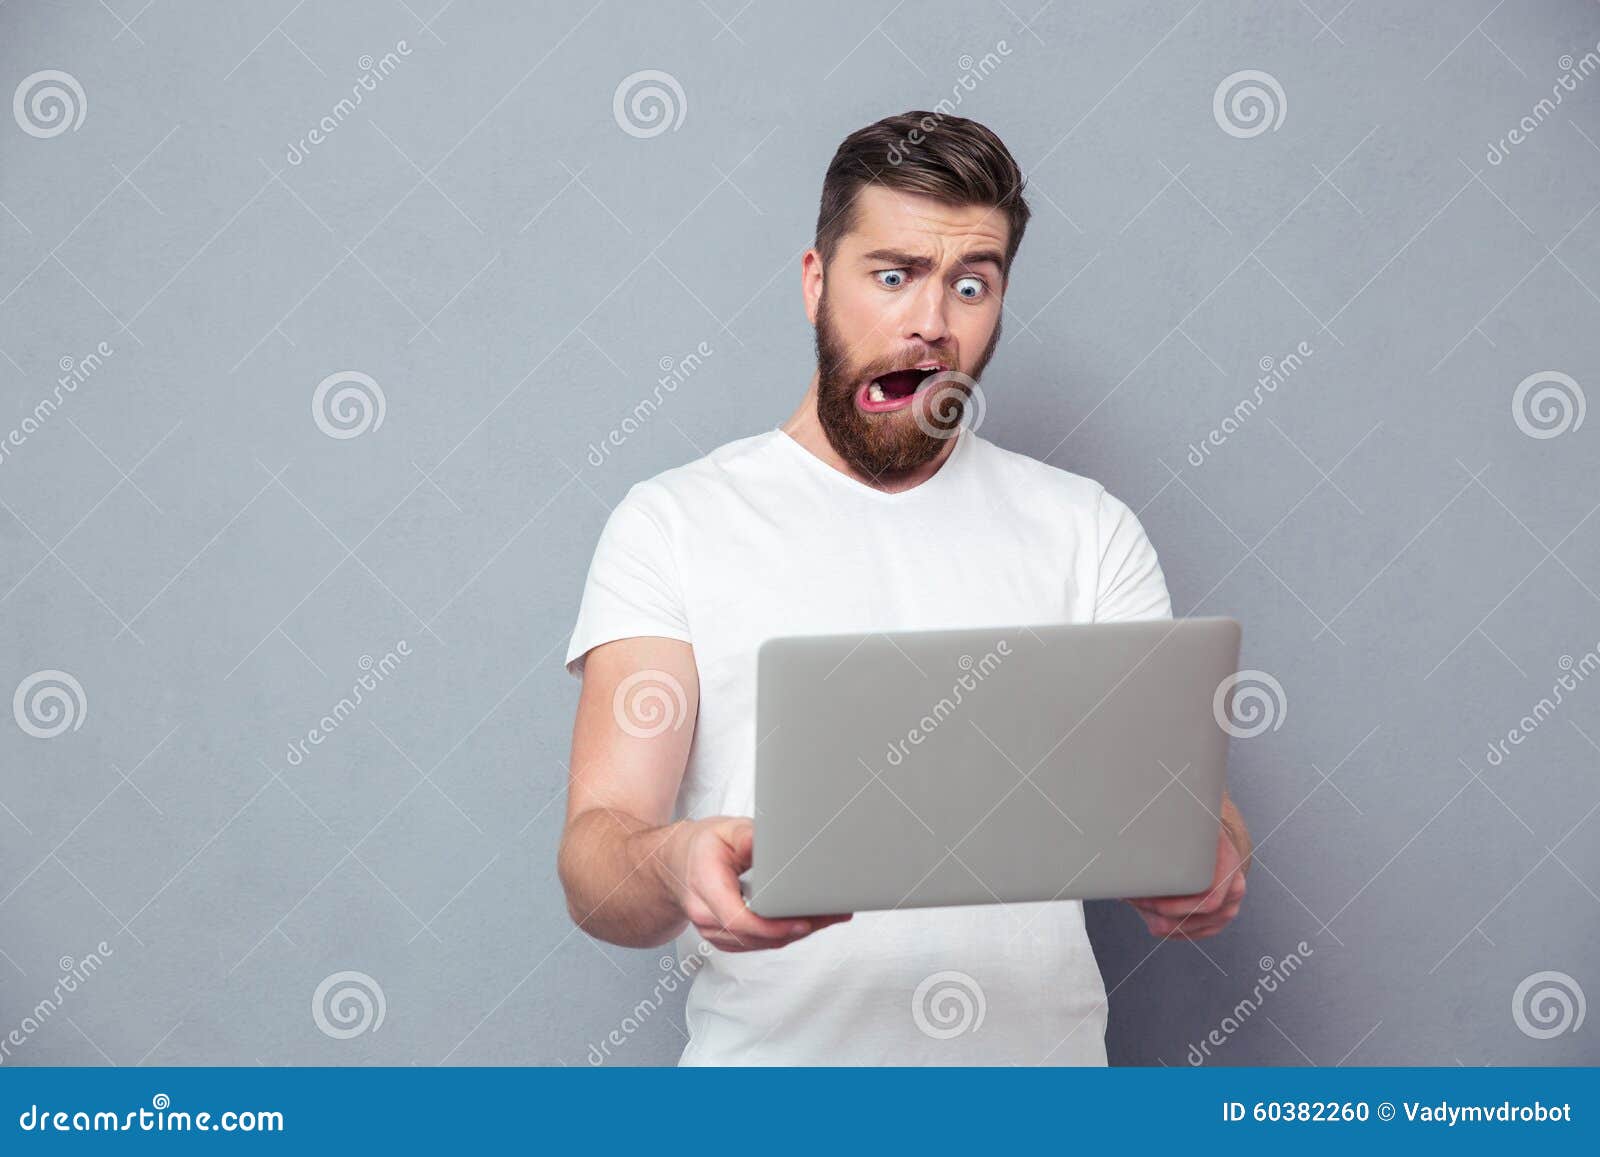 man with stupid mug using laptop